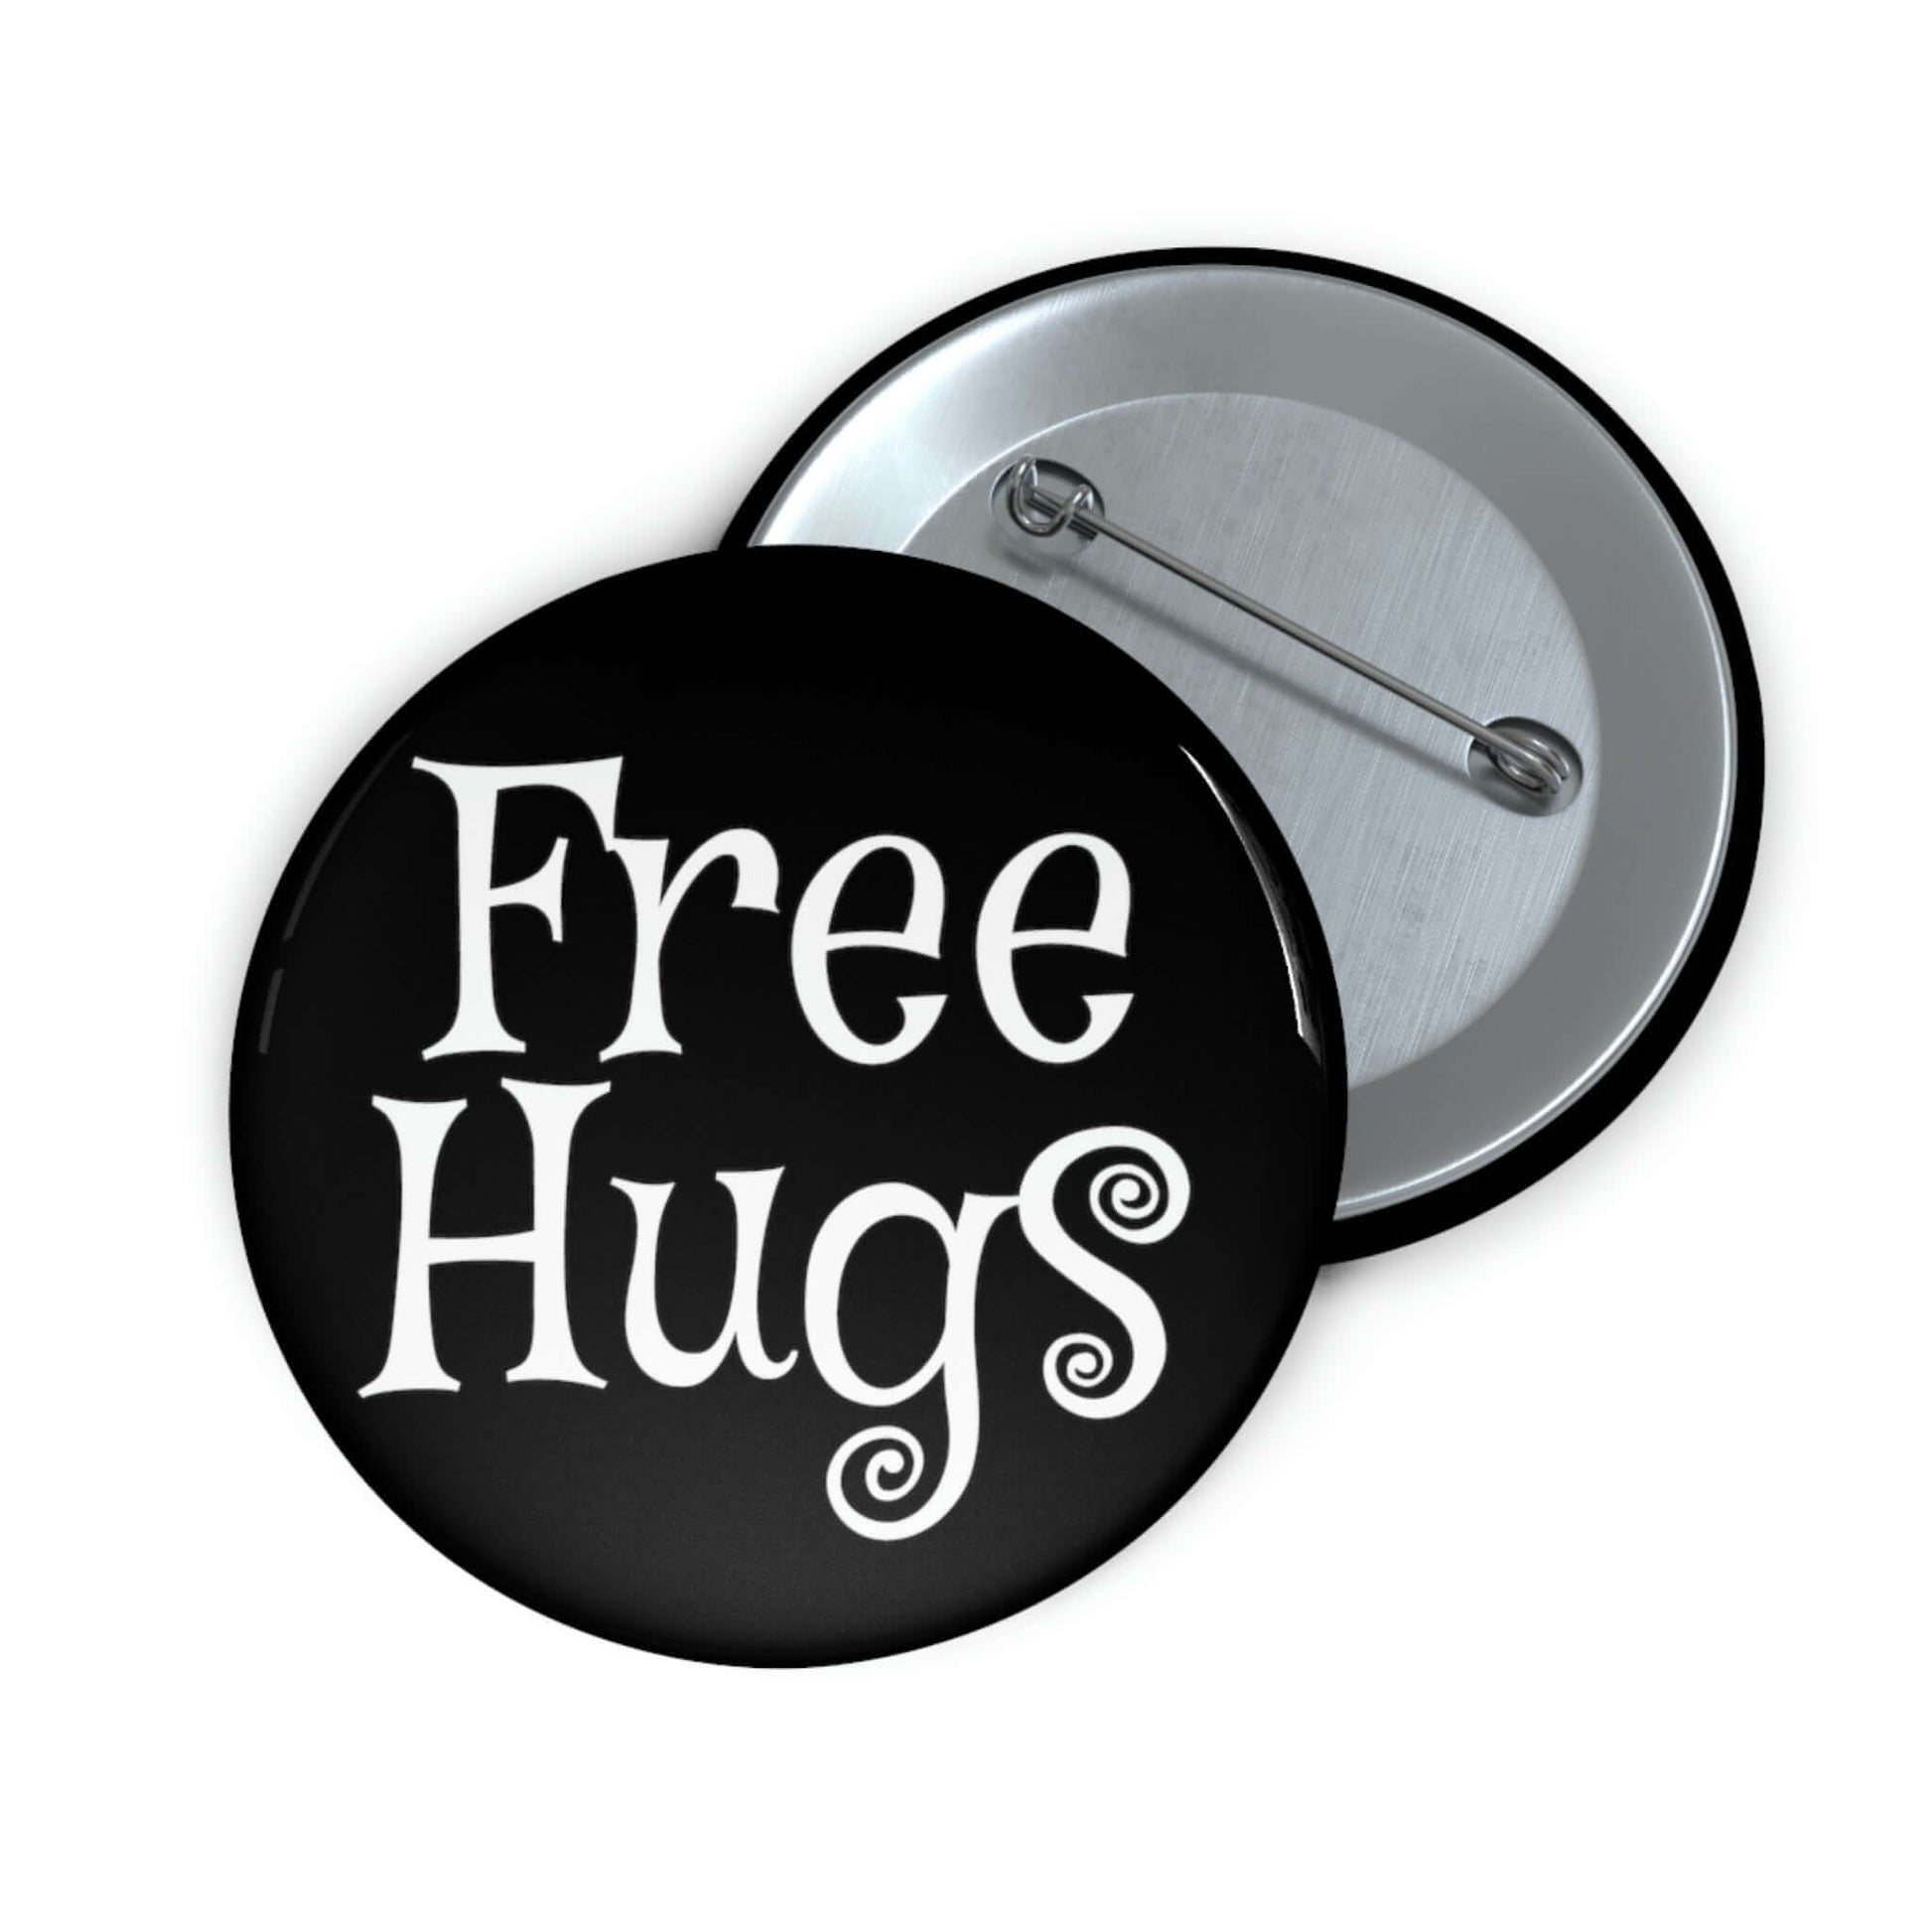 Pinback button that says Free Hugs.